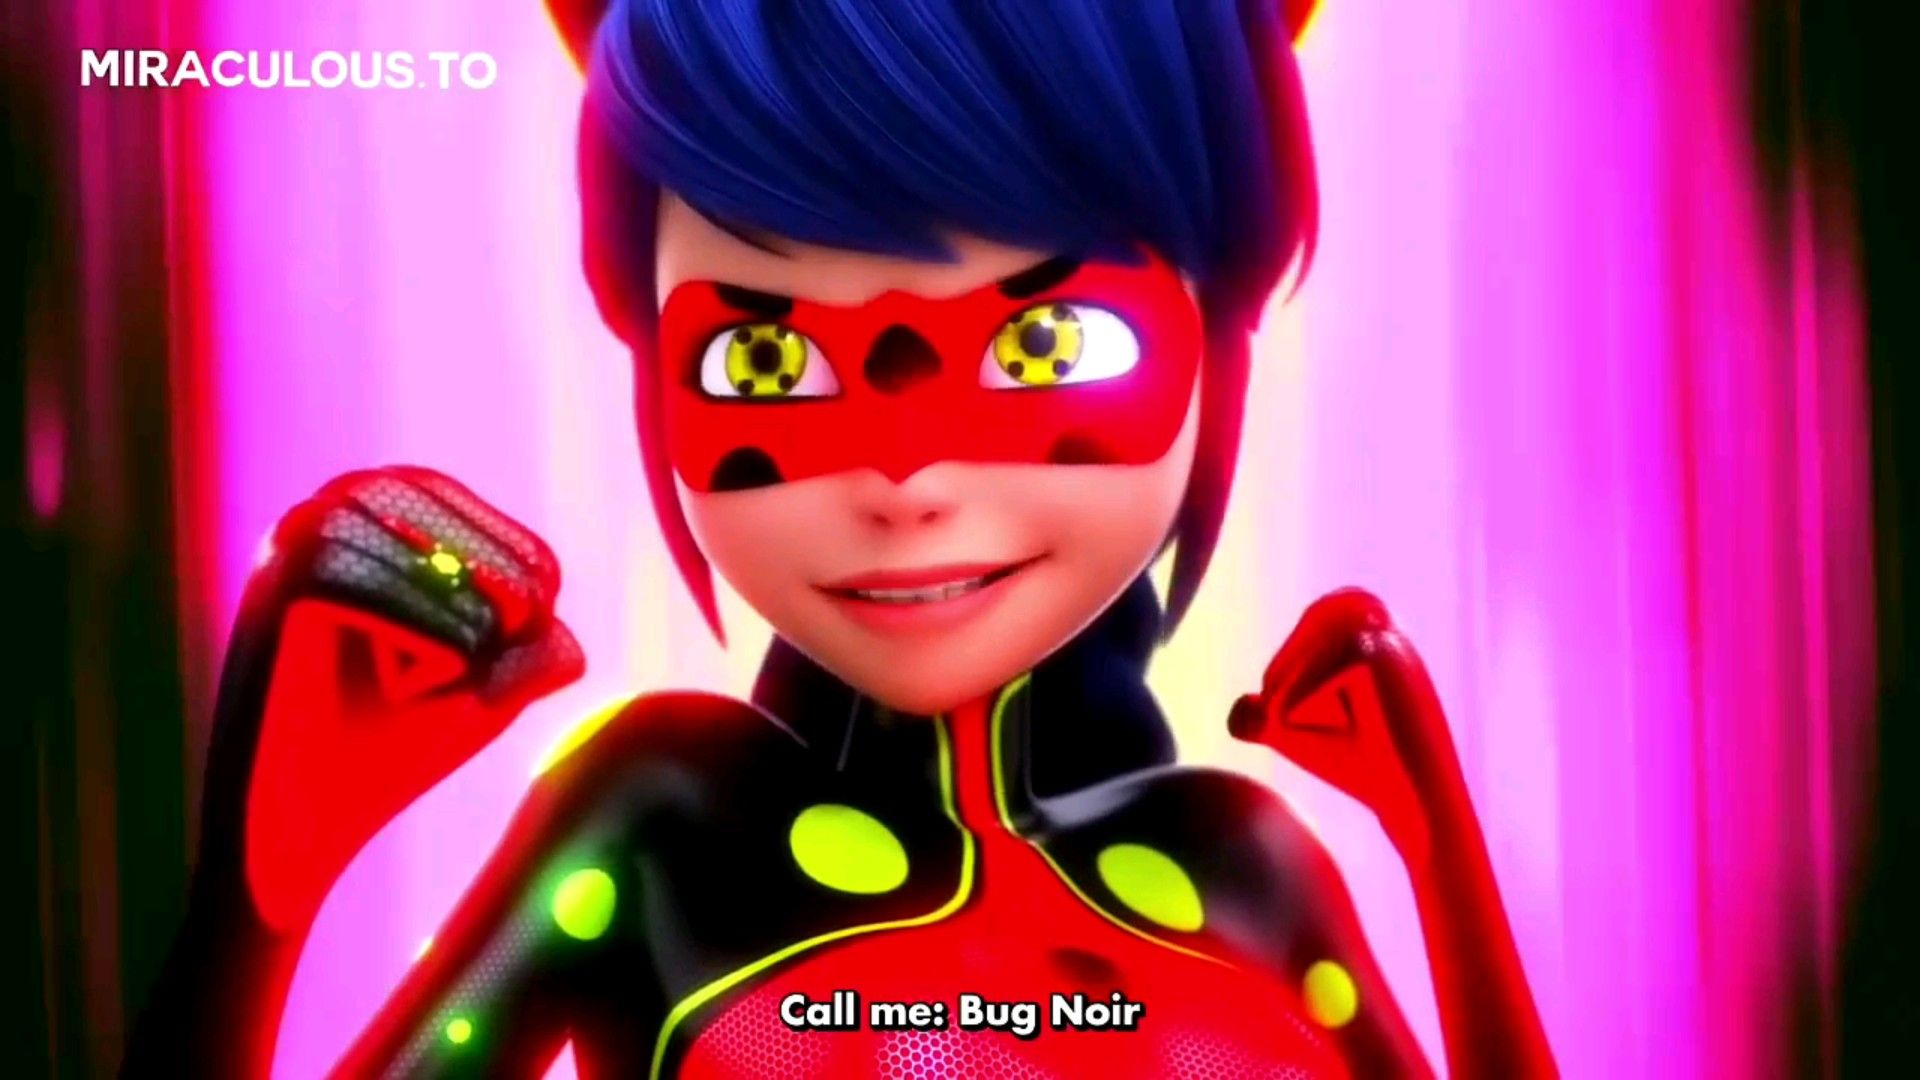 Miraculous tales of ladybug and cat Noir Season 5 Episode 23